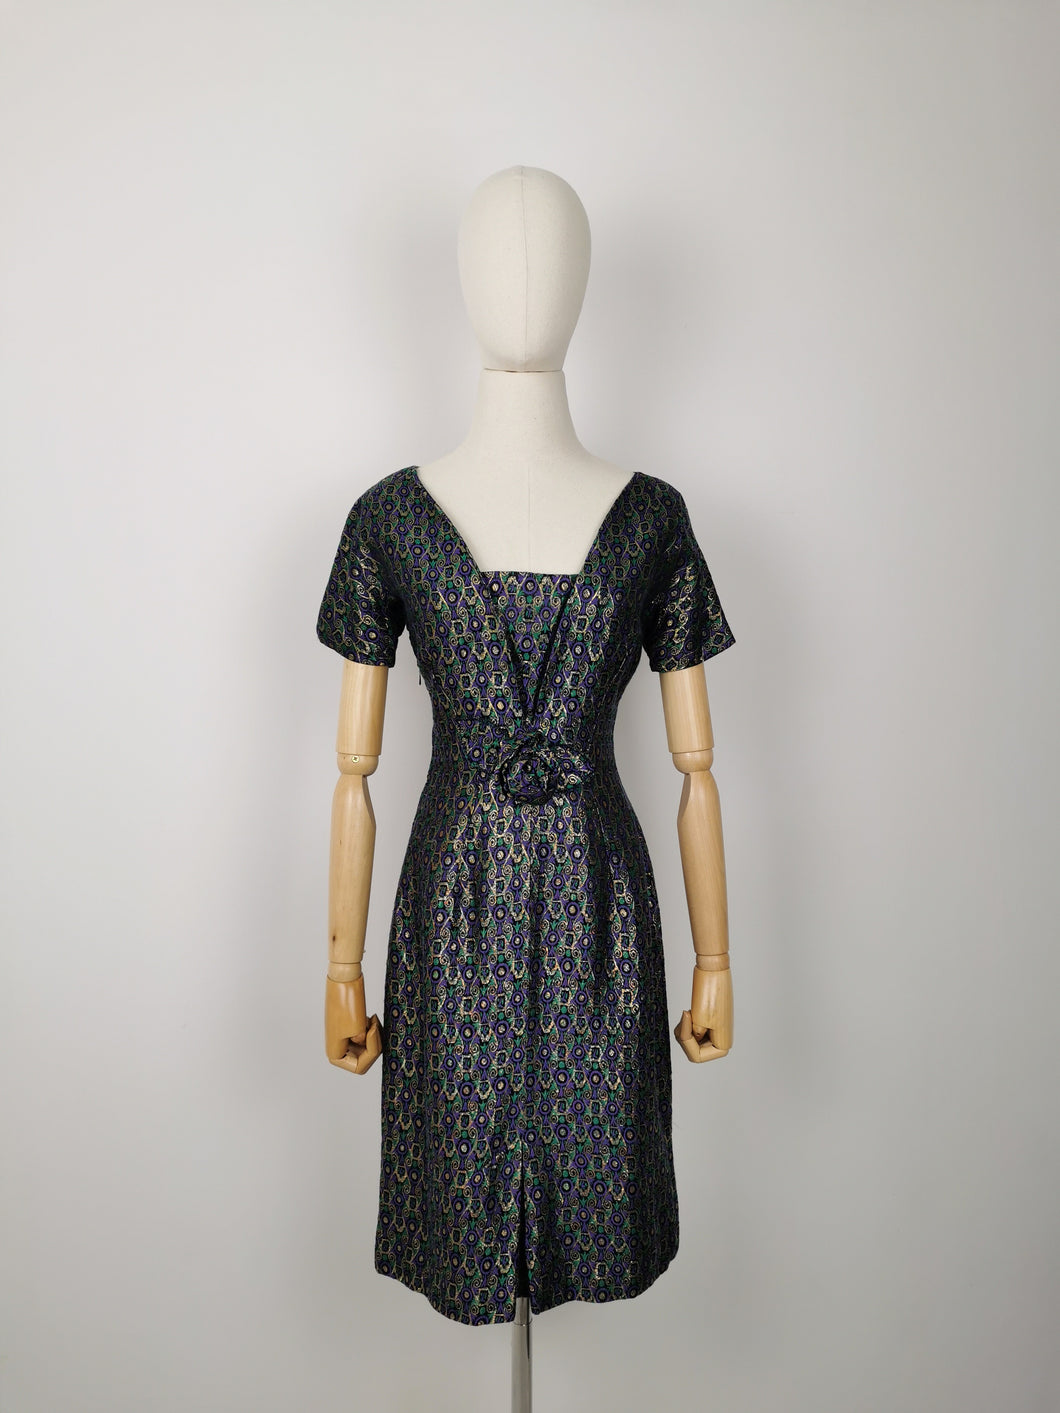 Vintage 60s abstract jacquard dress